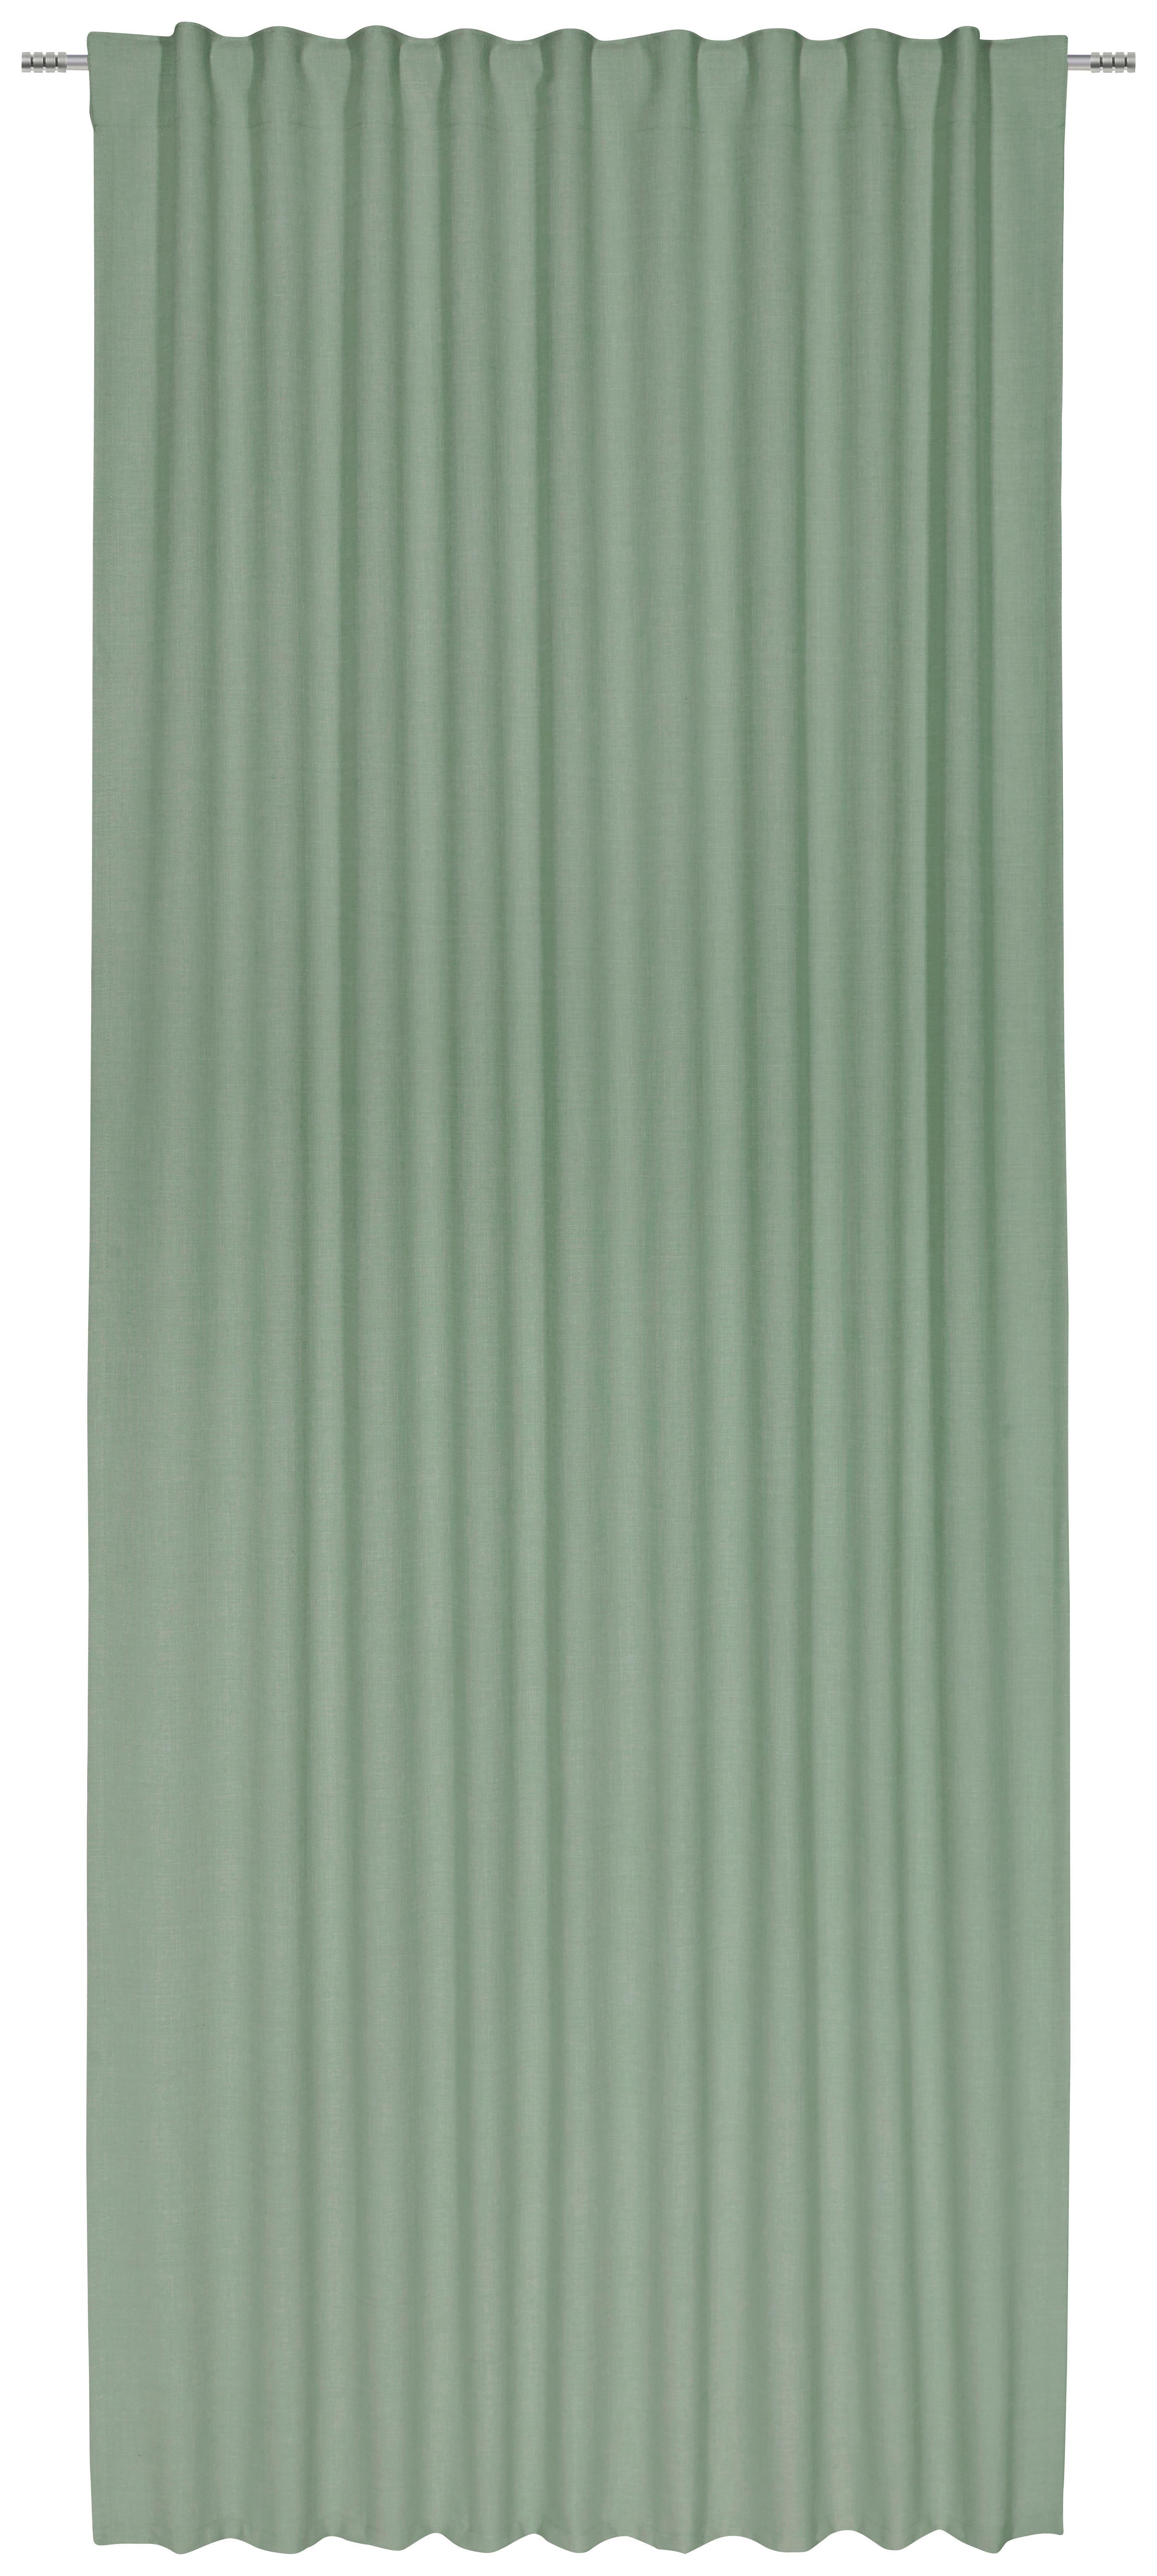 Hotový Záves Leo, 135/255cm, Zelená - olivovozelená, textil (135/255cm) - Premium Living